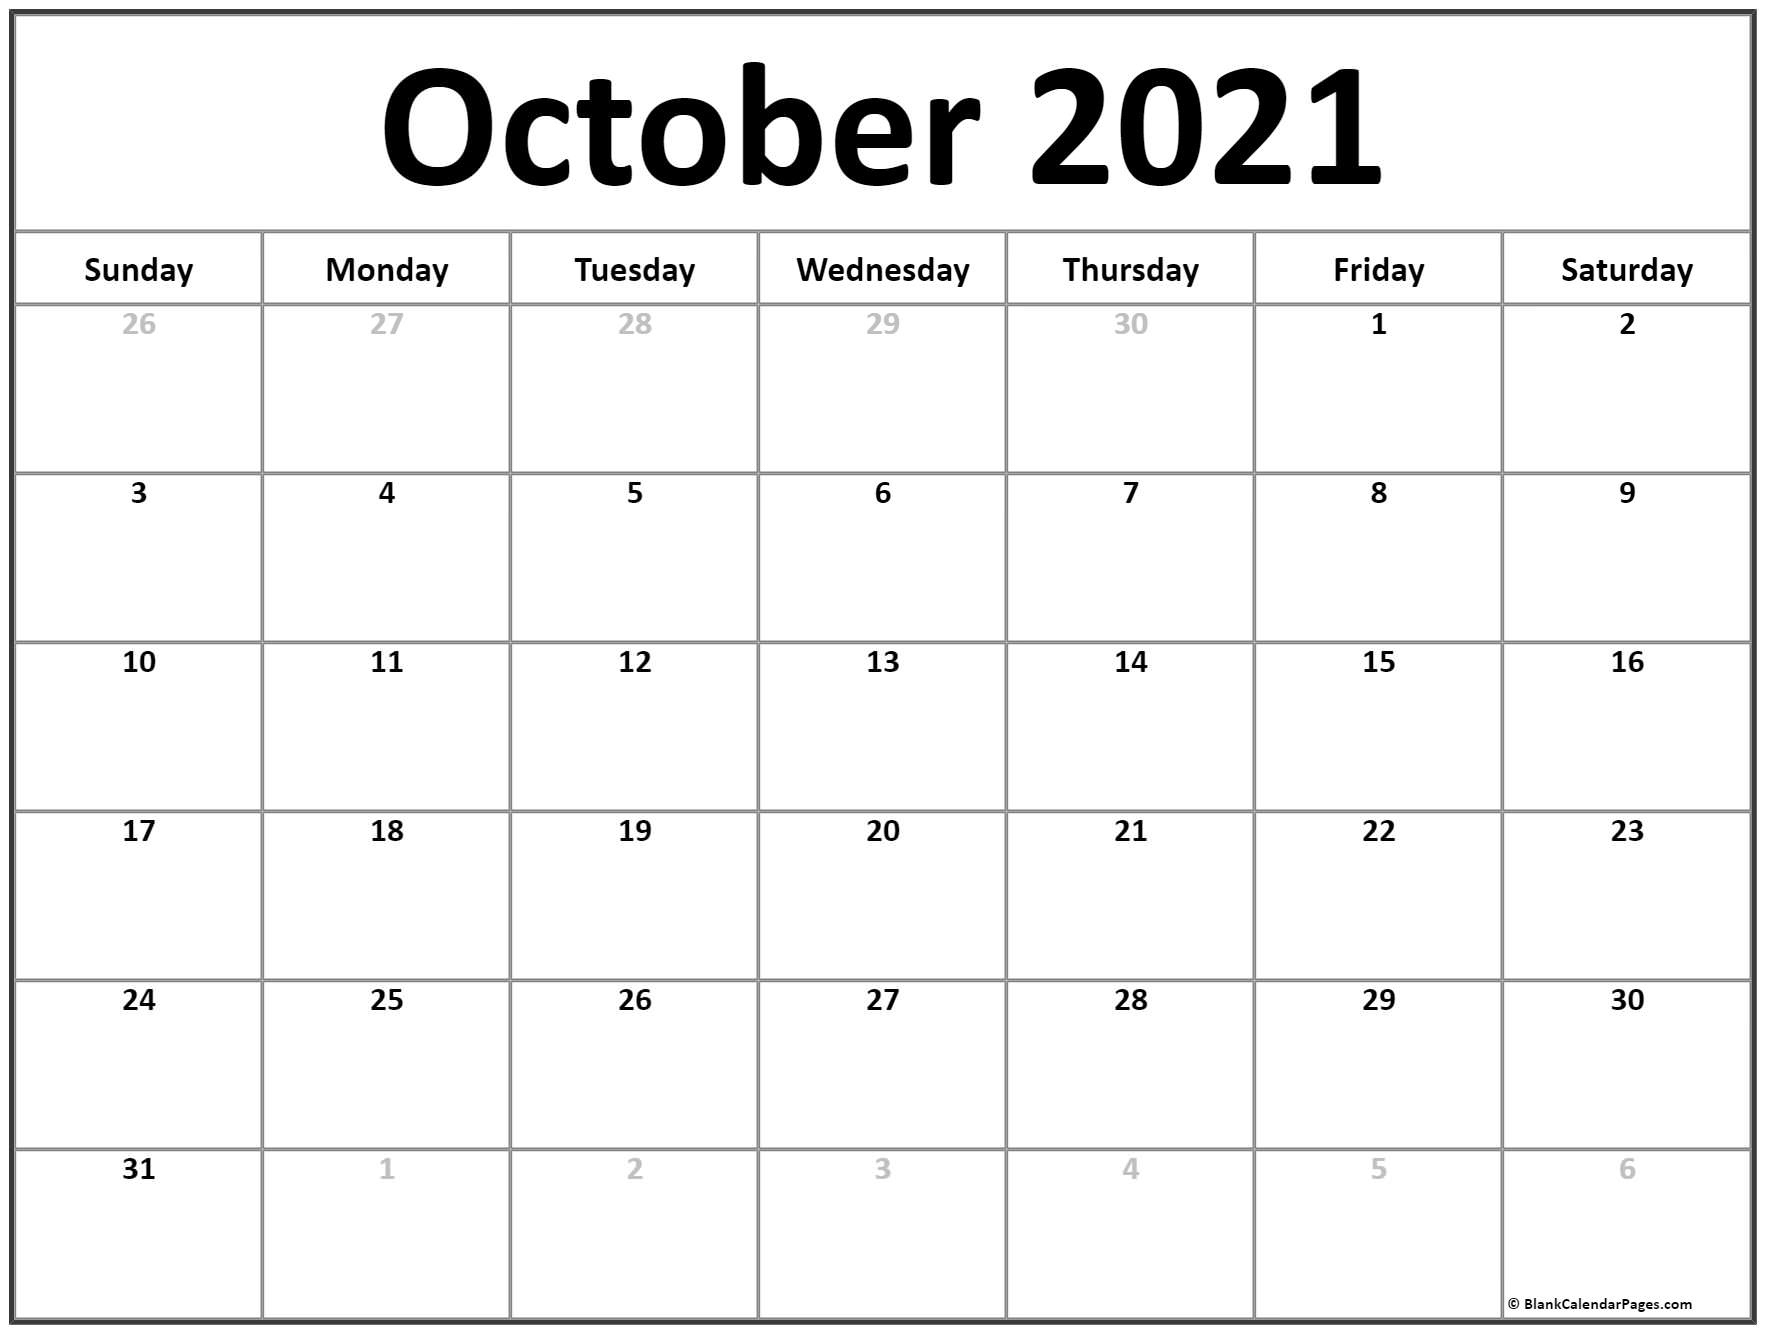 October 2021 Calendar | Free Printable Calendar Templates August 2021 Calendar Events